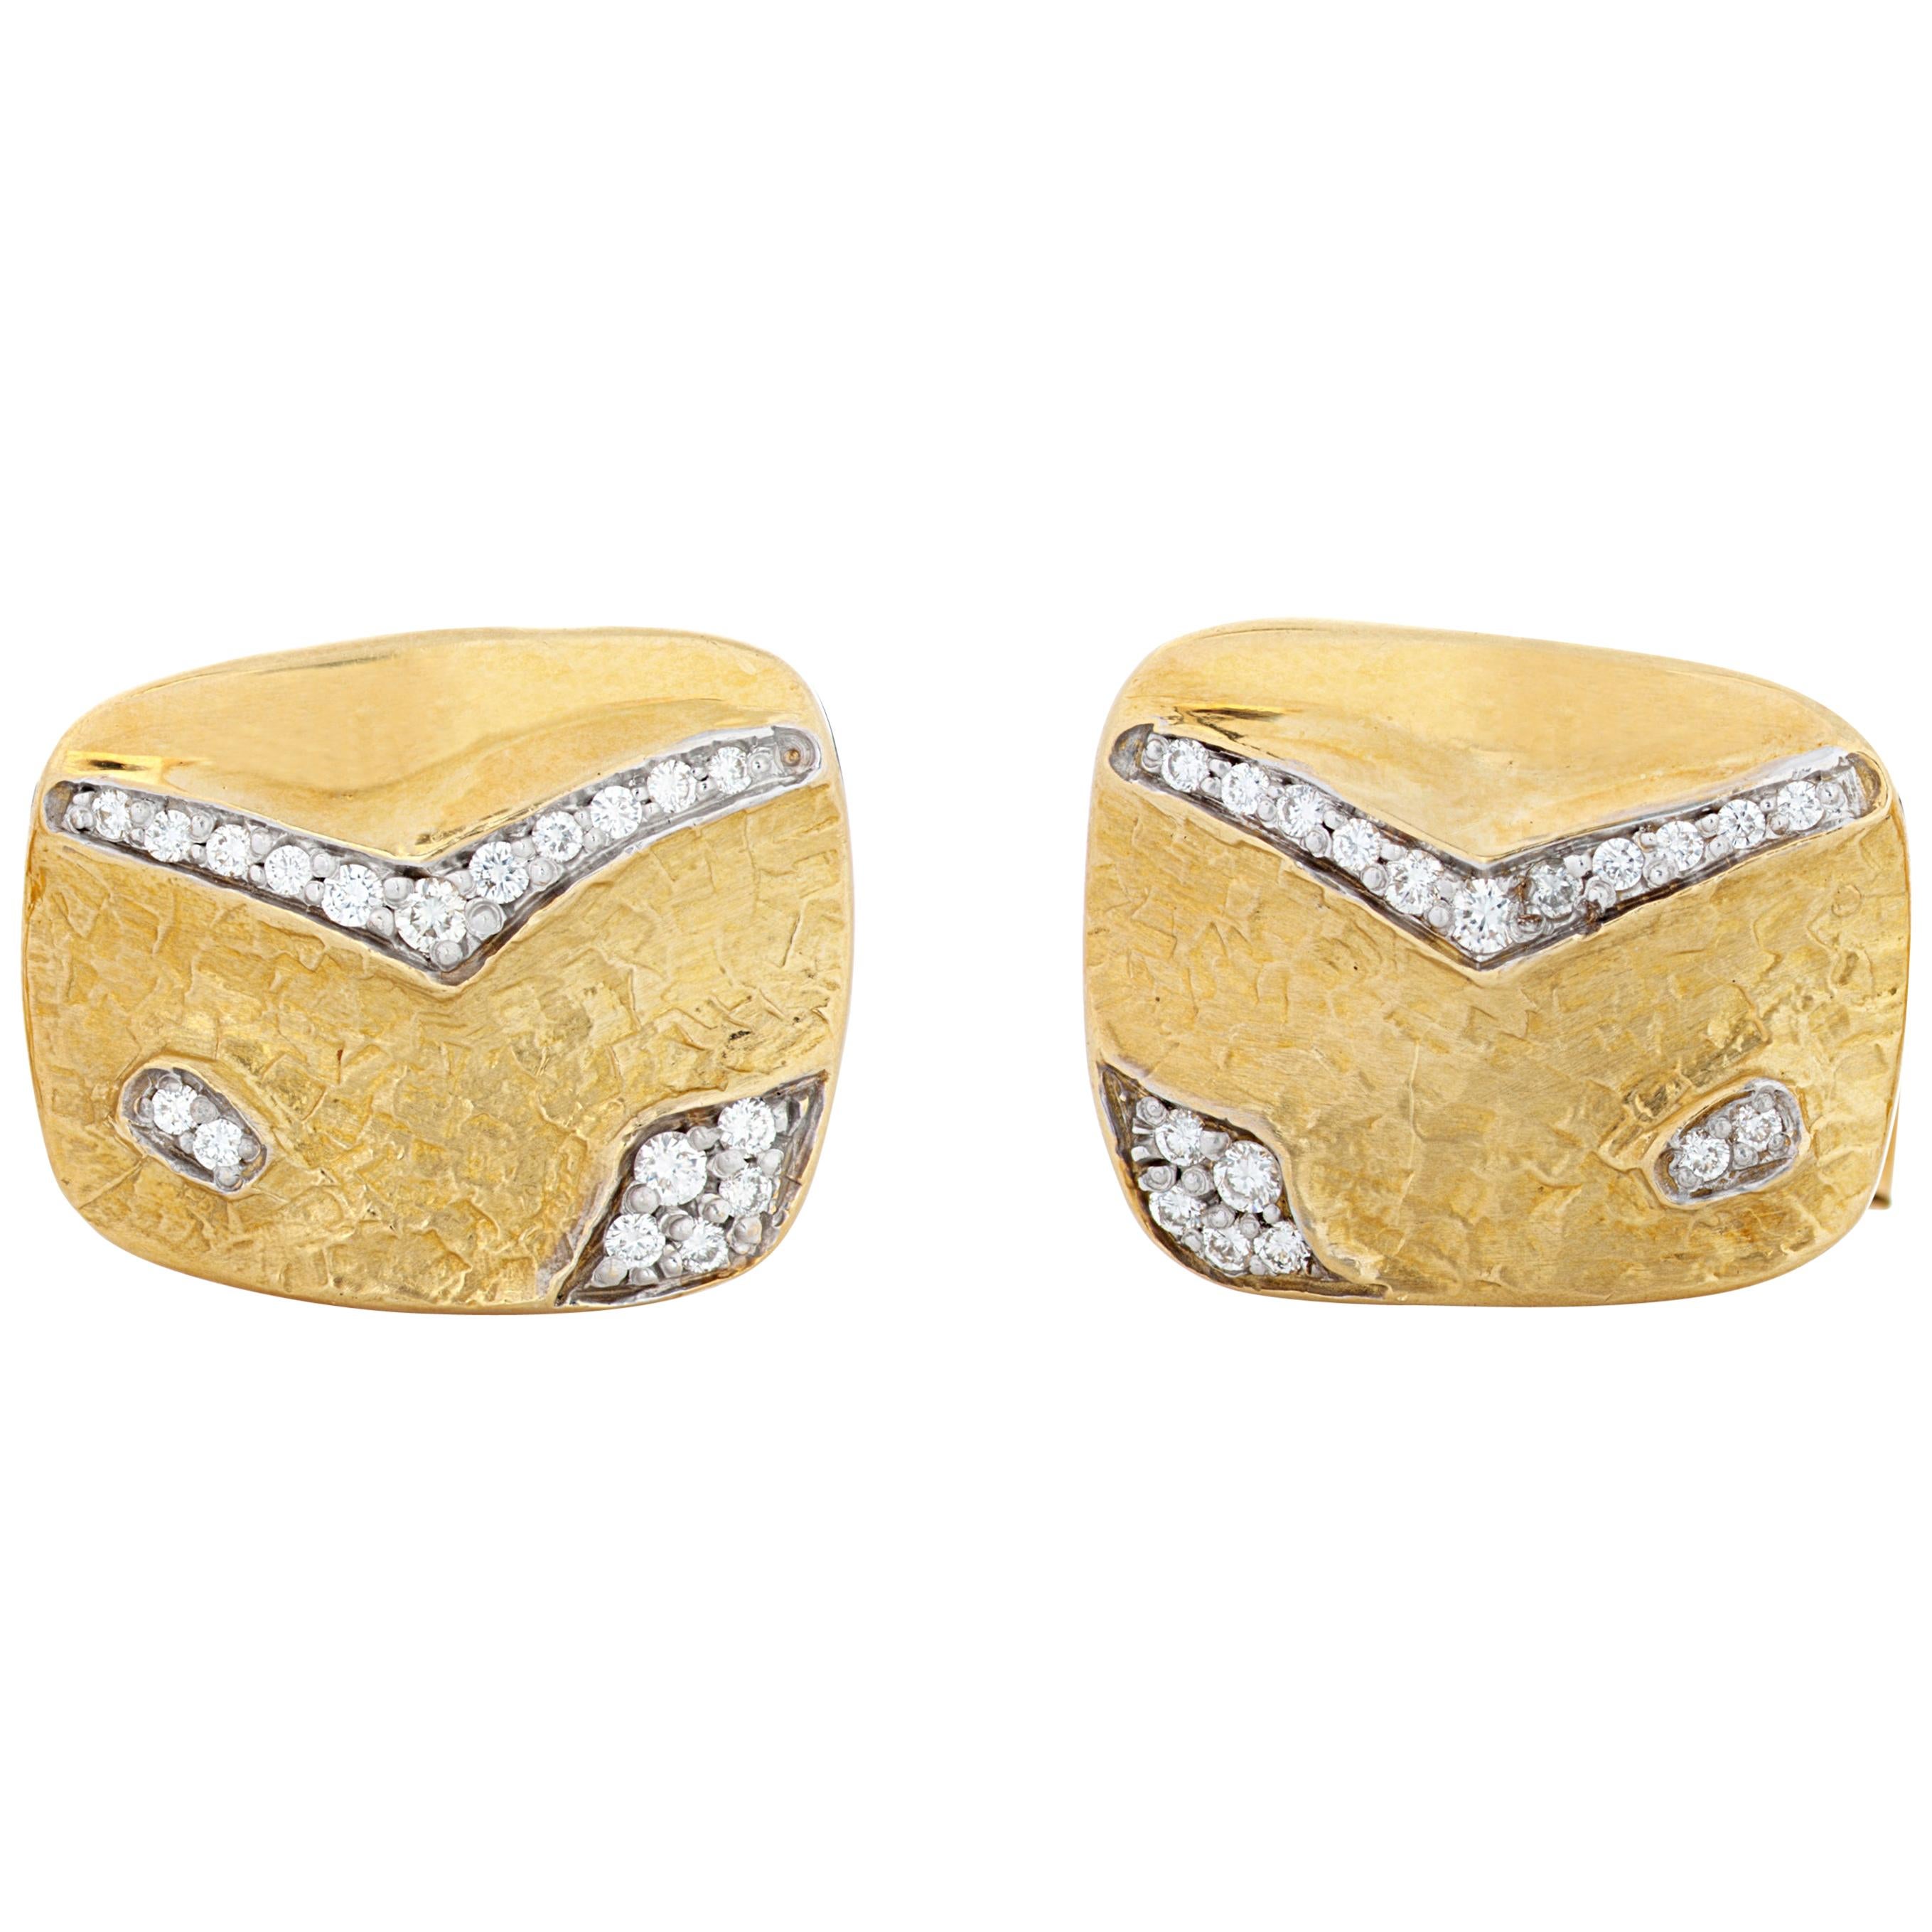 SeidenGang 18 Karat Yellow Gold Cufflinks with 0.36 Carat of Diamonds